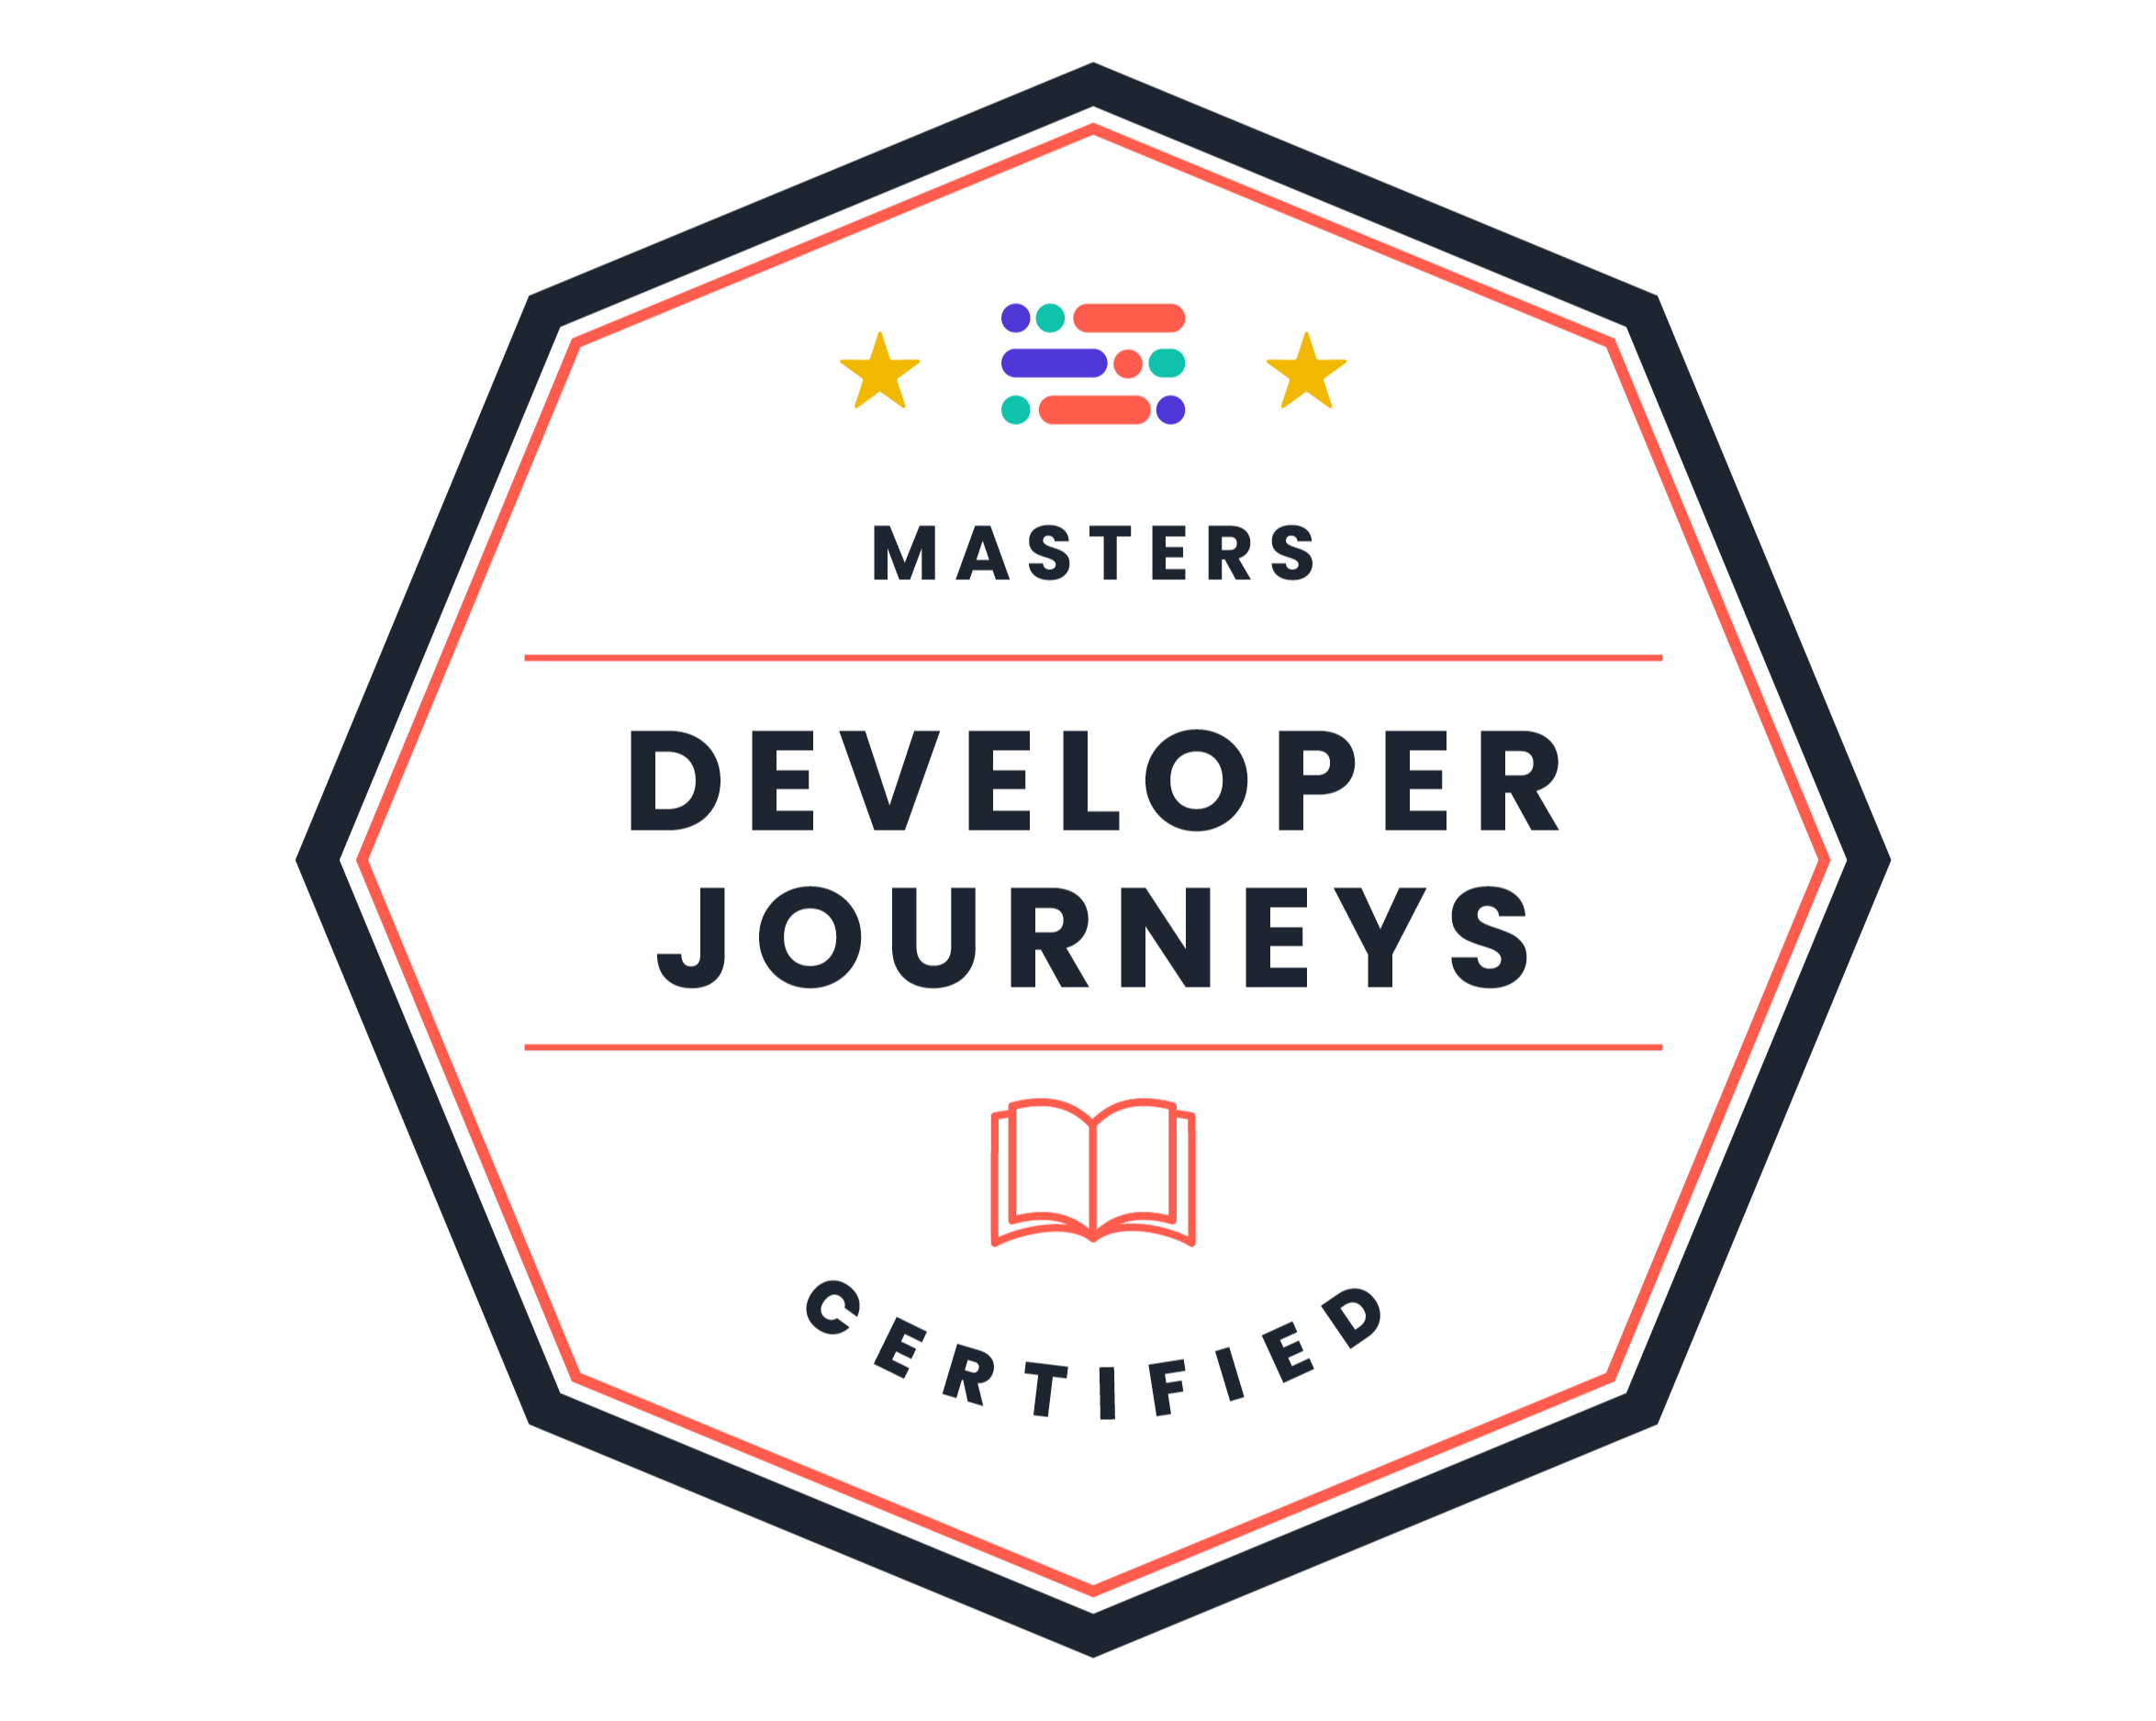 Developer Journey Certified | Masters badge